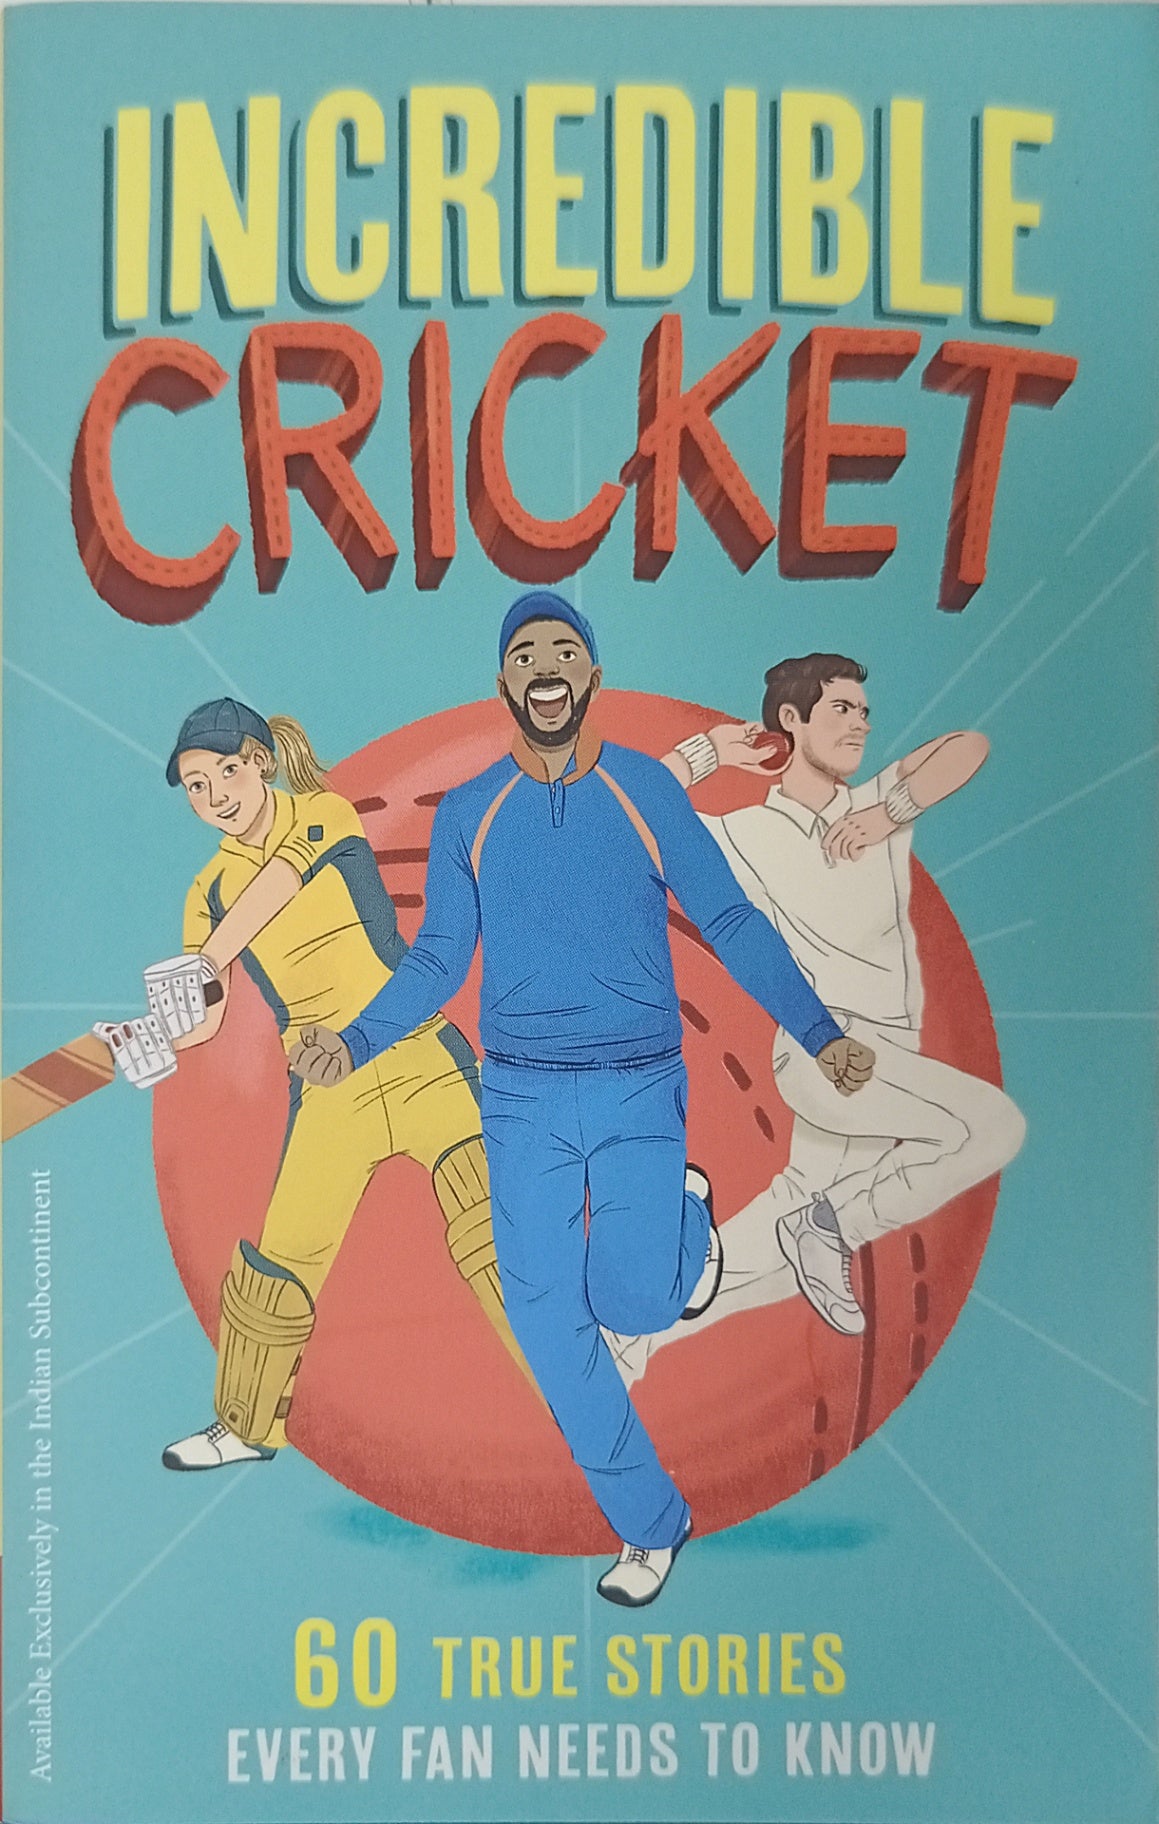 Incredible Cricket